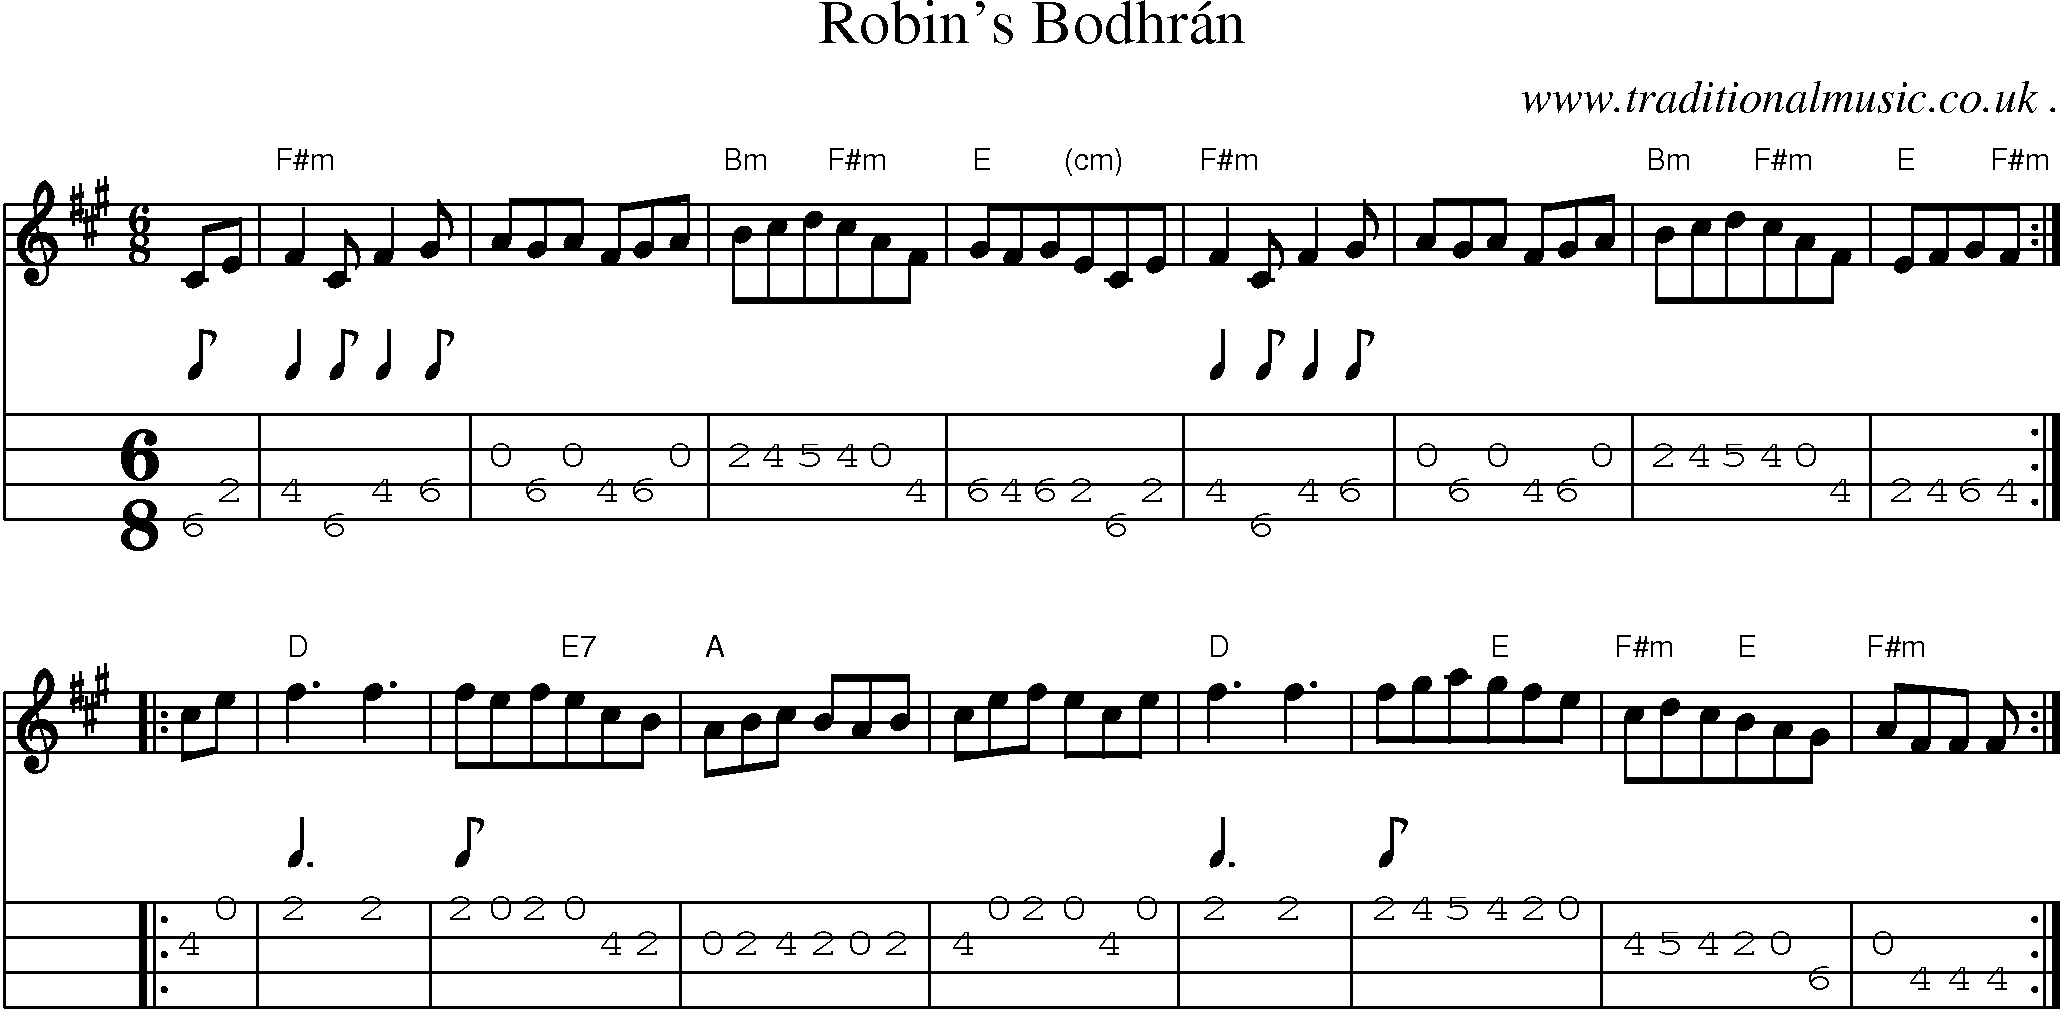 Sheet-Music and Mandolin Tabs for Robins Bodhran